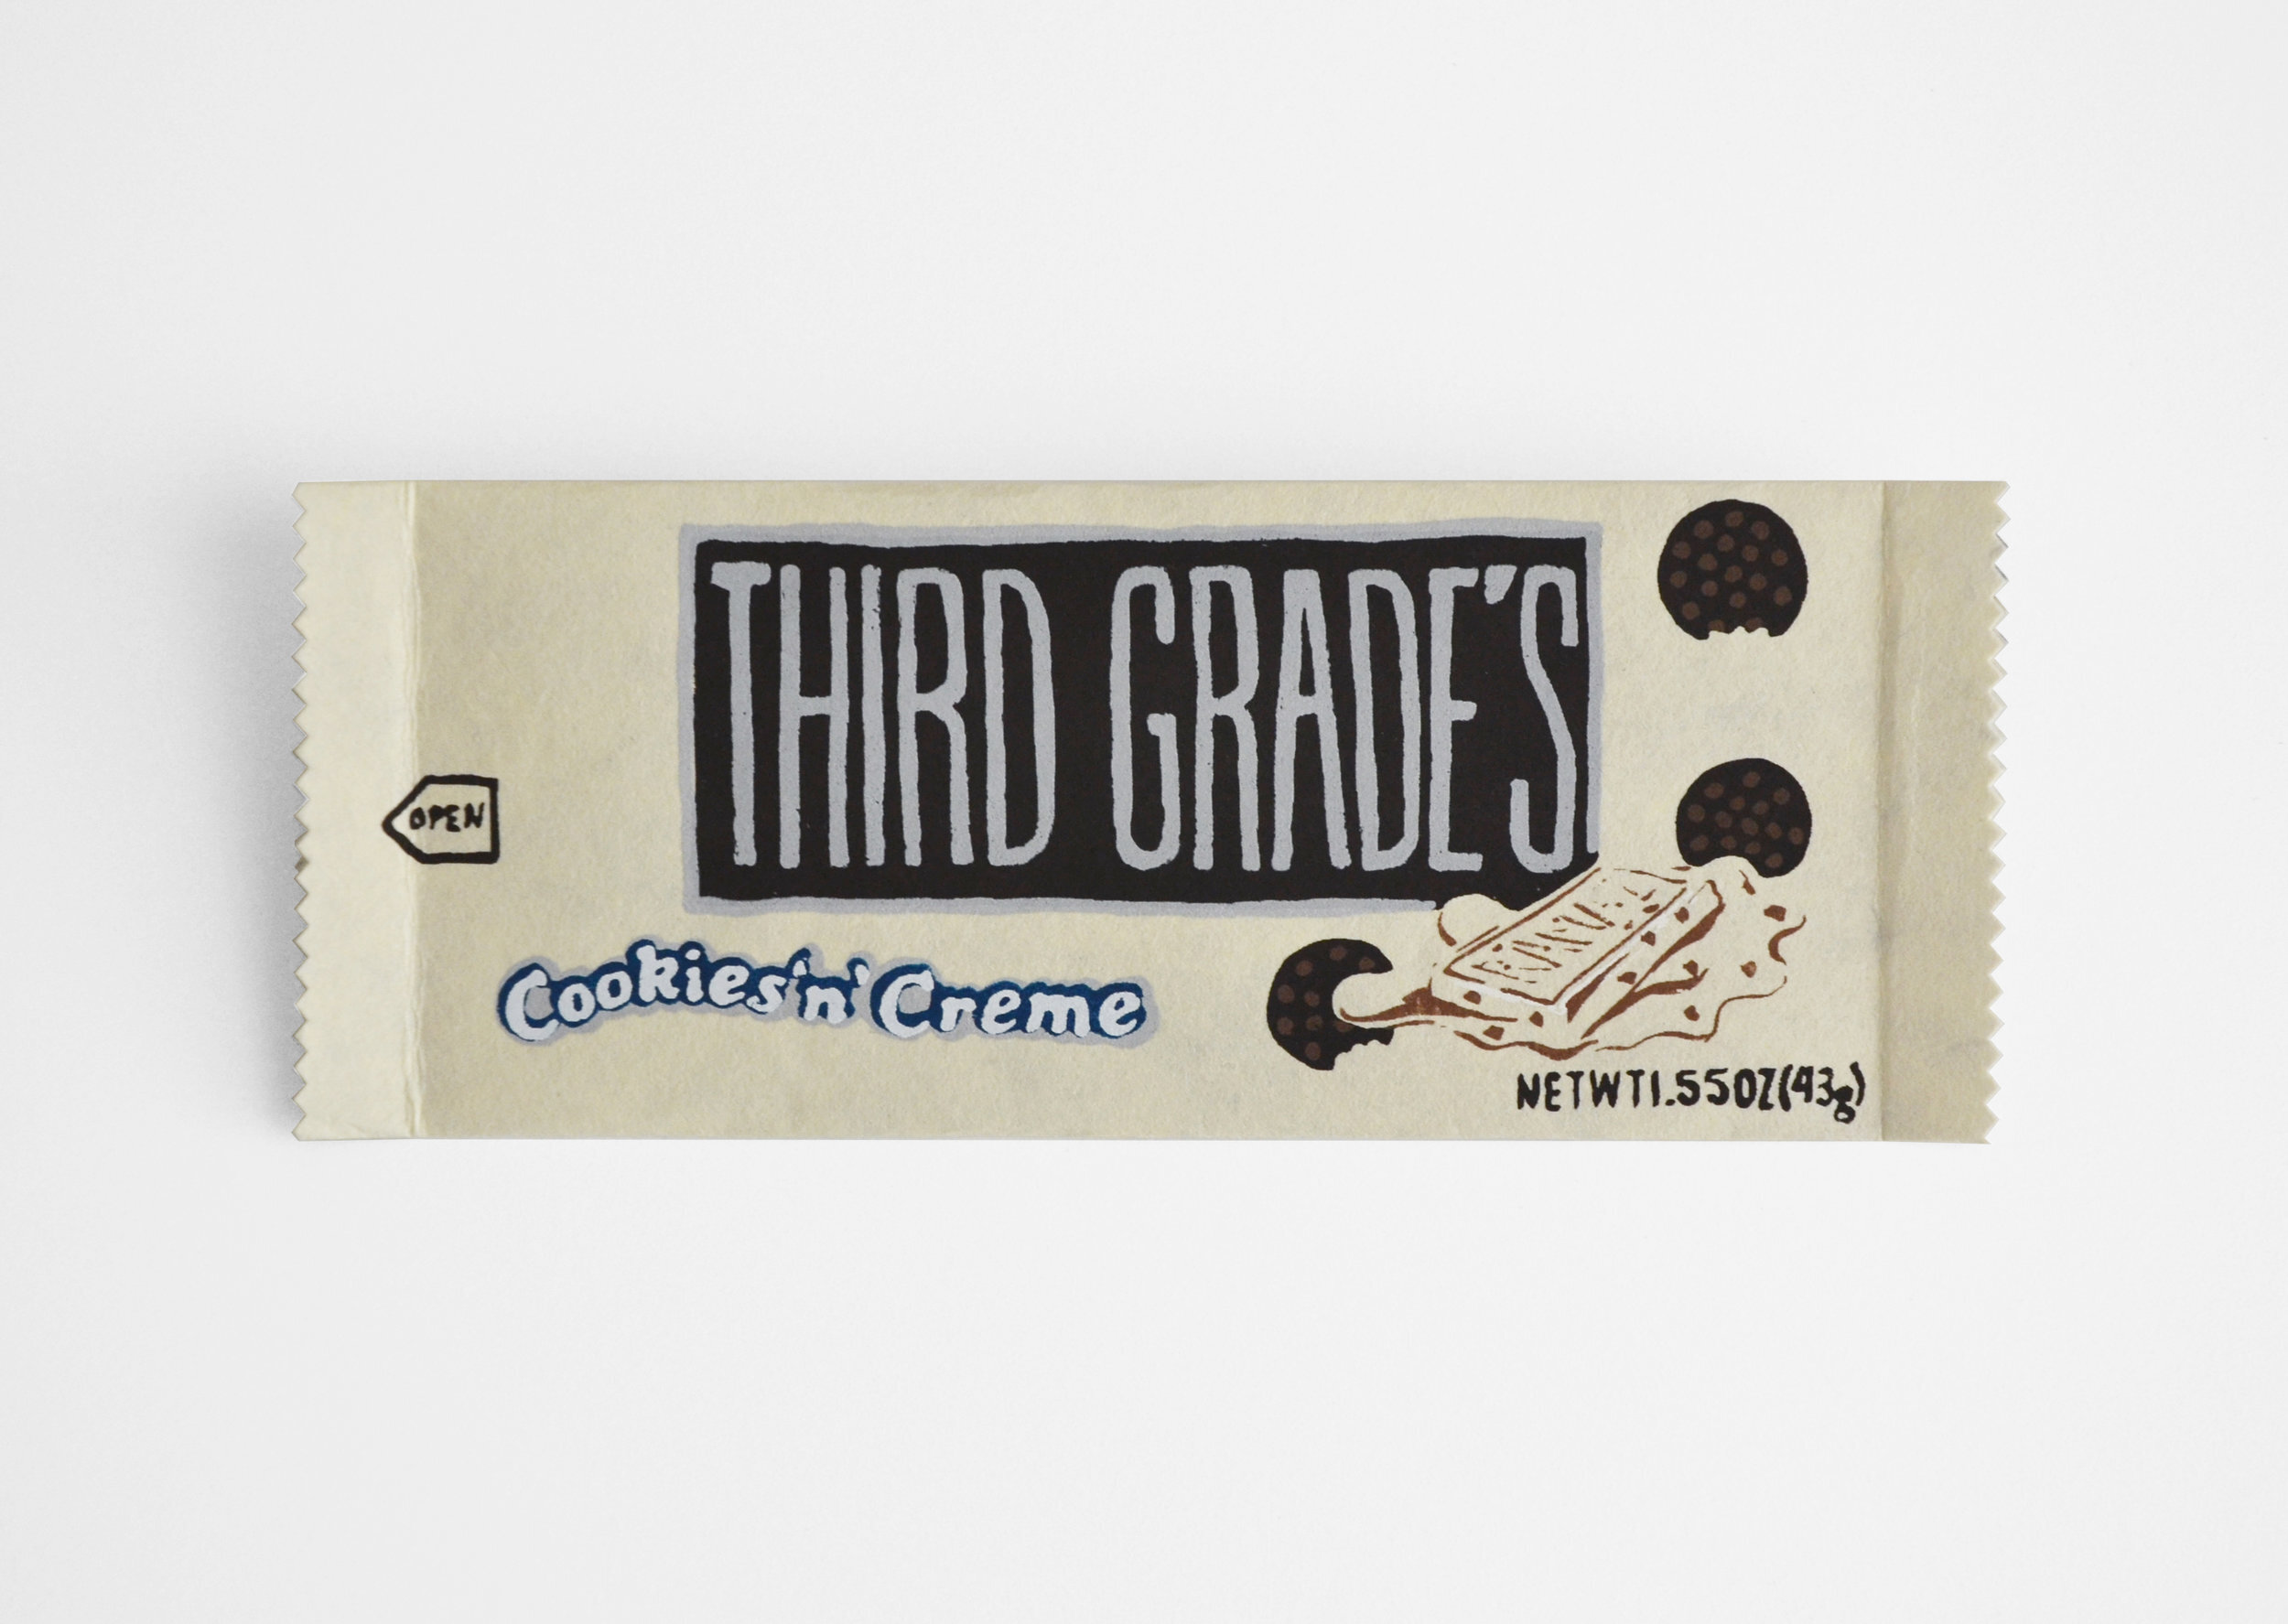 Third Grade's Cookies n' Creme